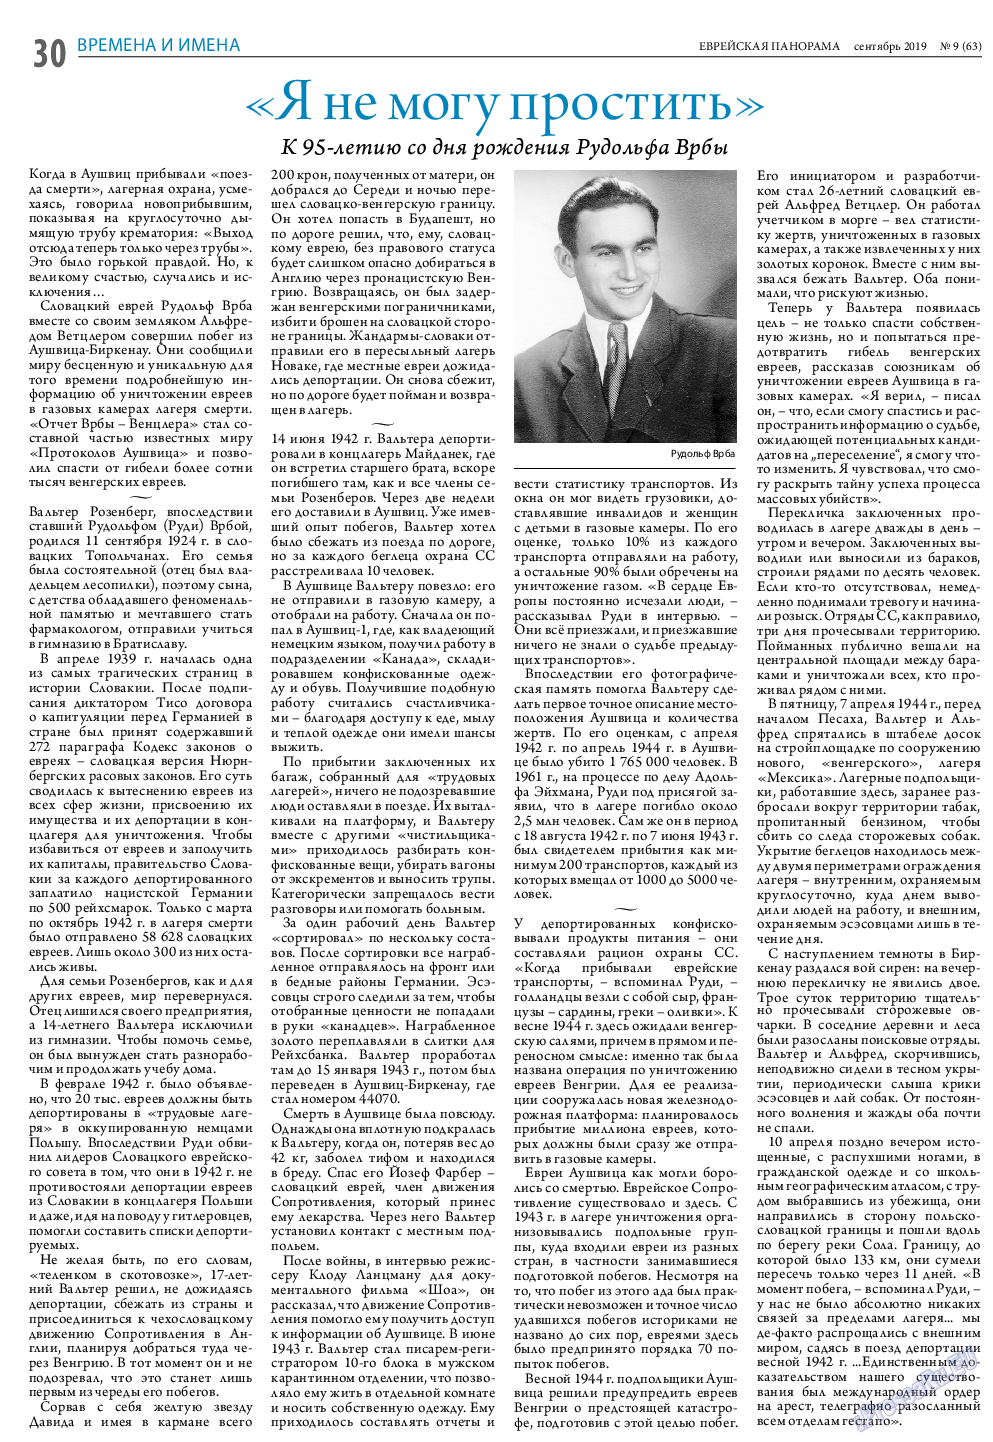 Еврейская панорама, газета. 2019 №9 стр.30